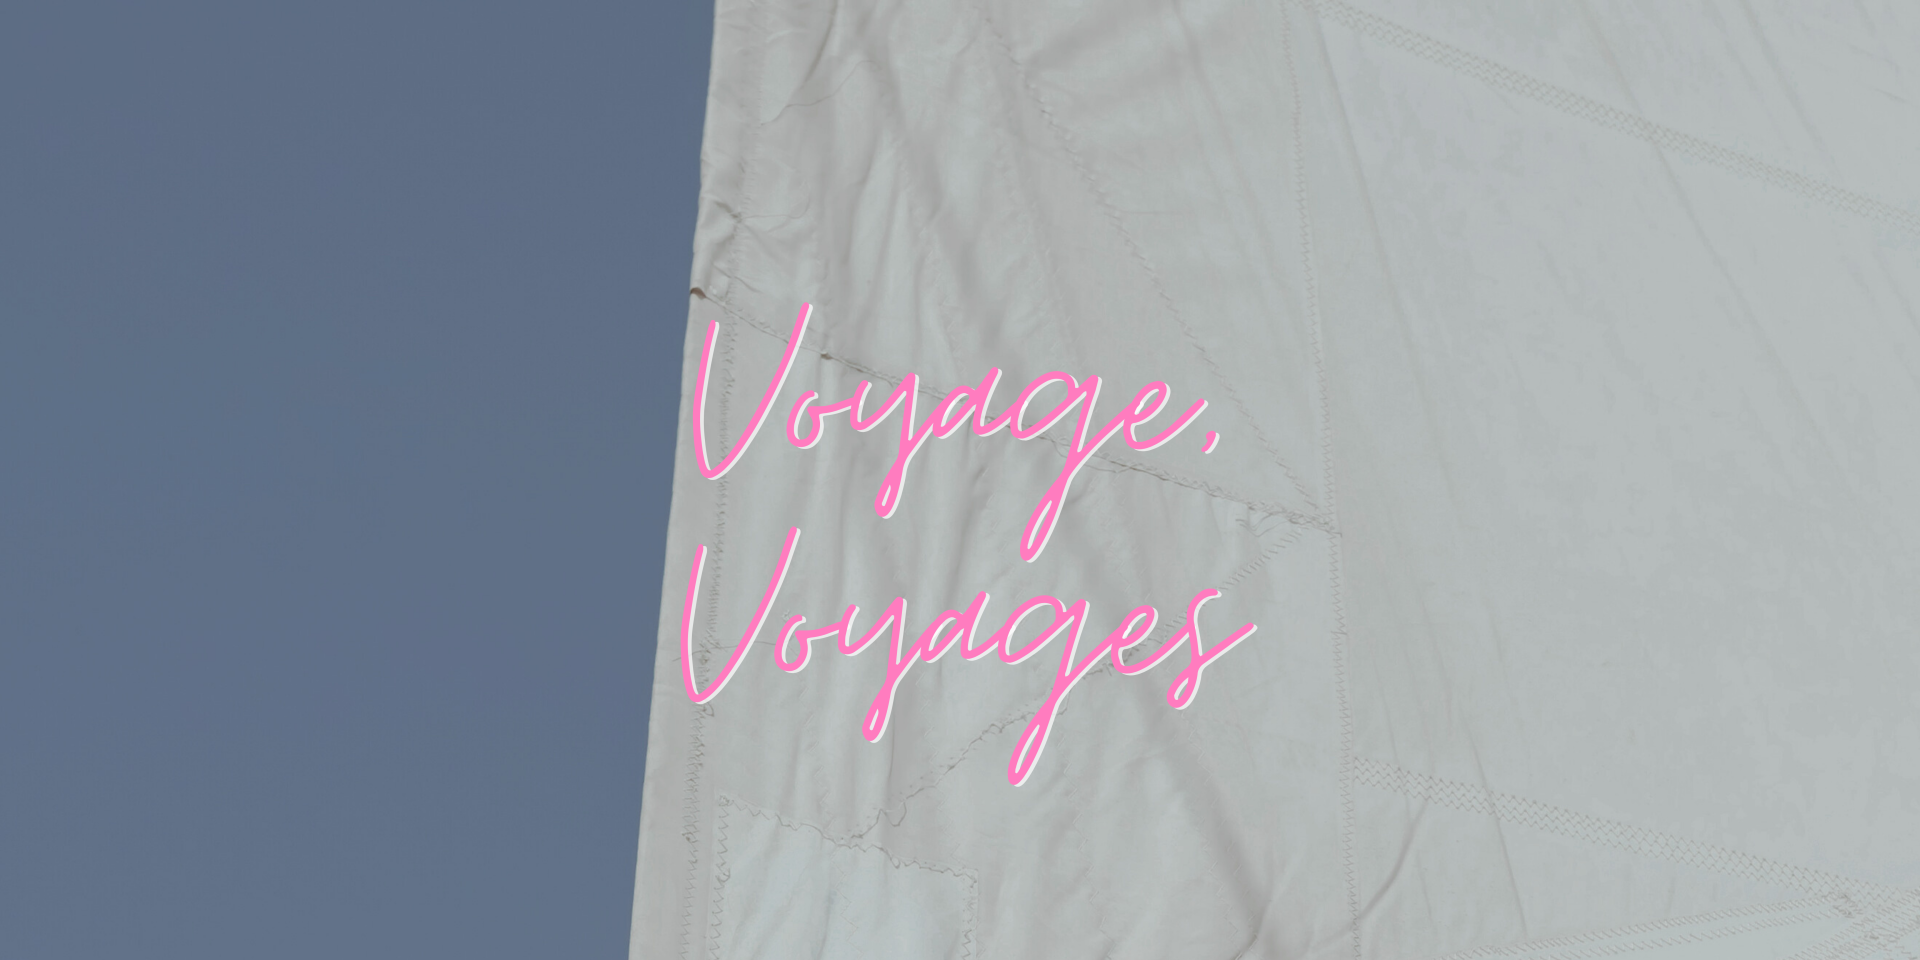 voyage_voyages_1080_x_1350_px_medium_banner_us_landscape.png